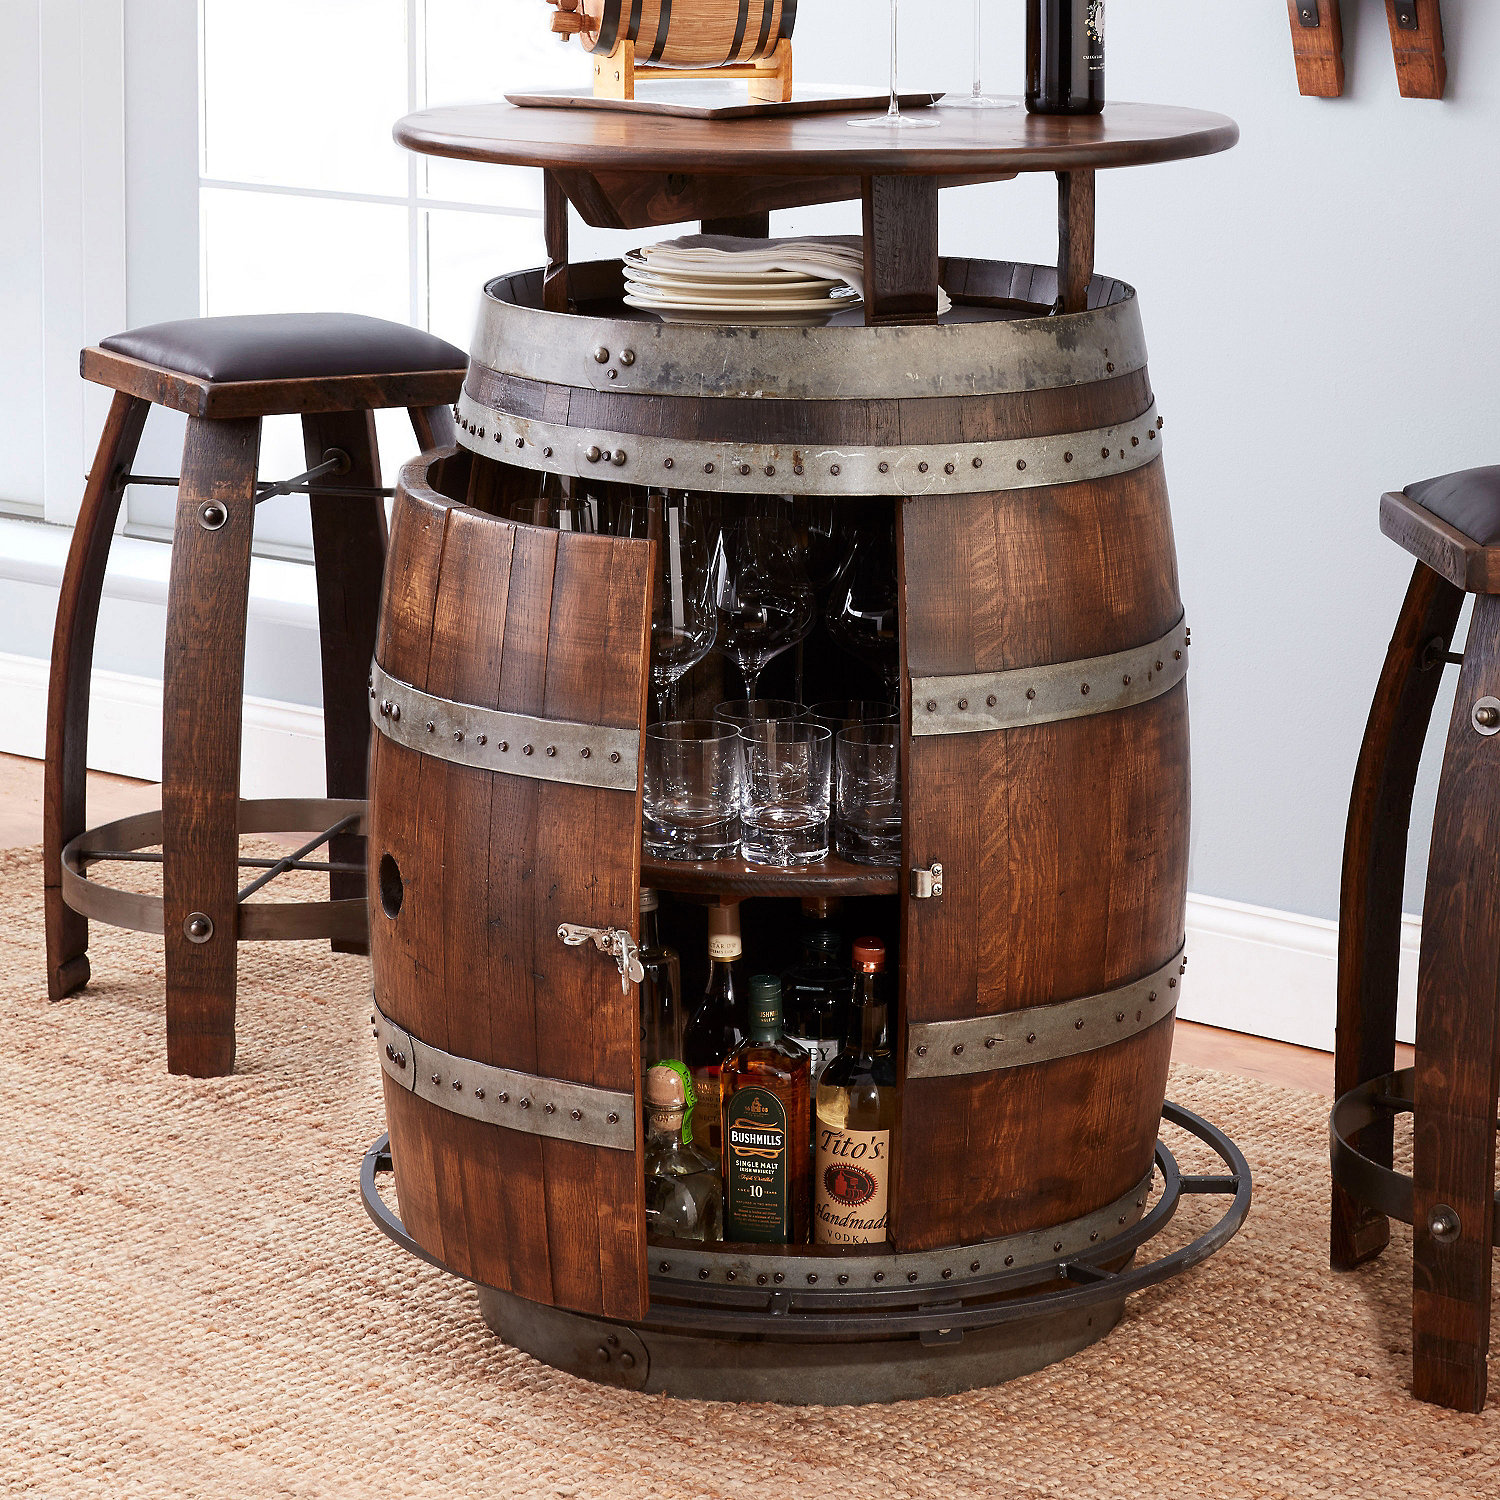 Why You Should Buy Wine Barrel Furniture?